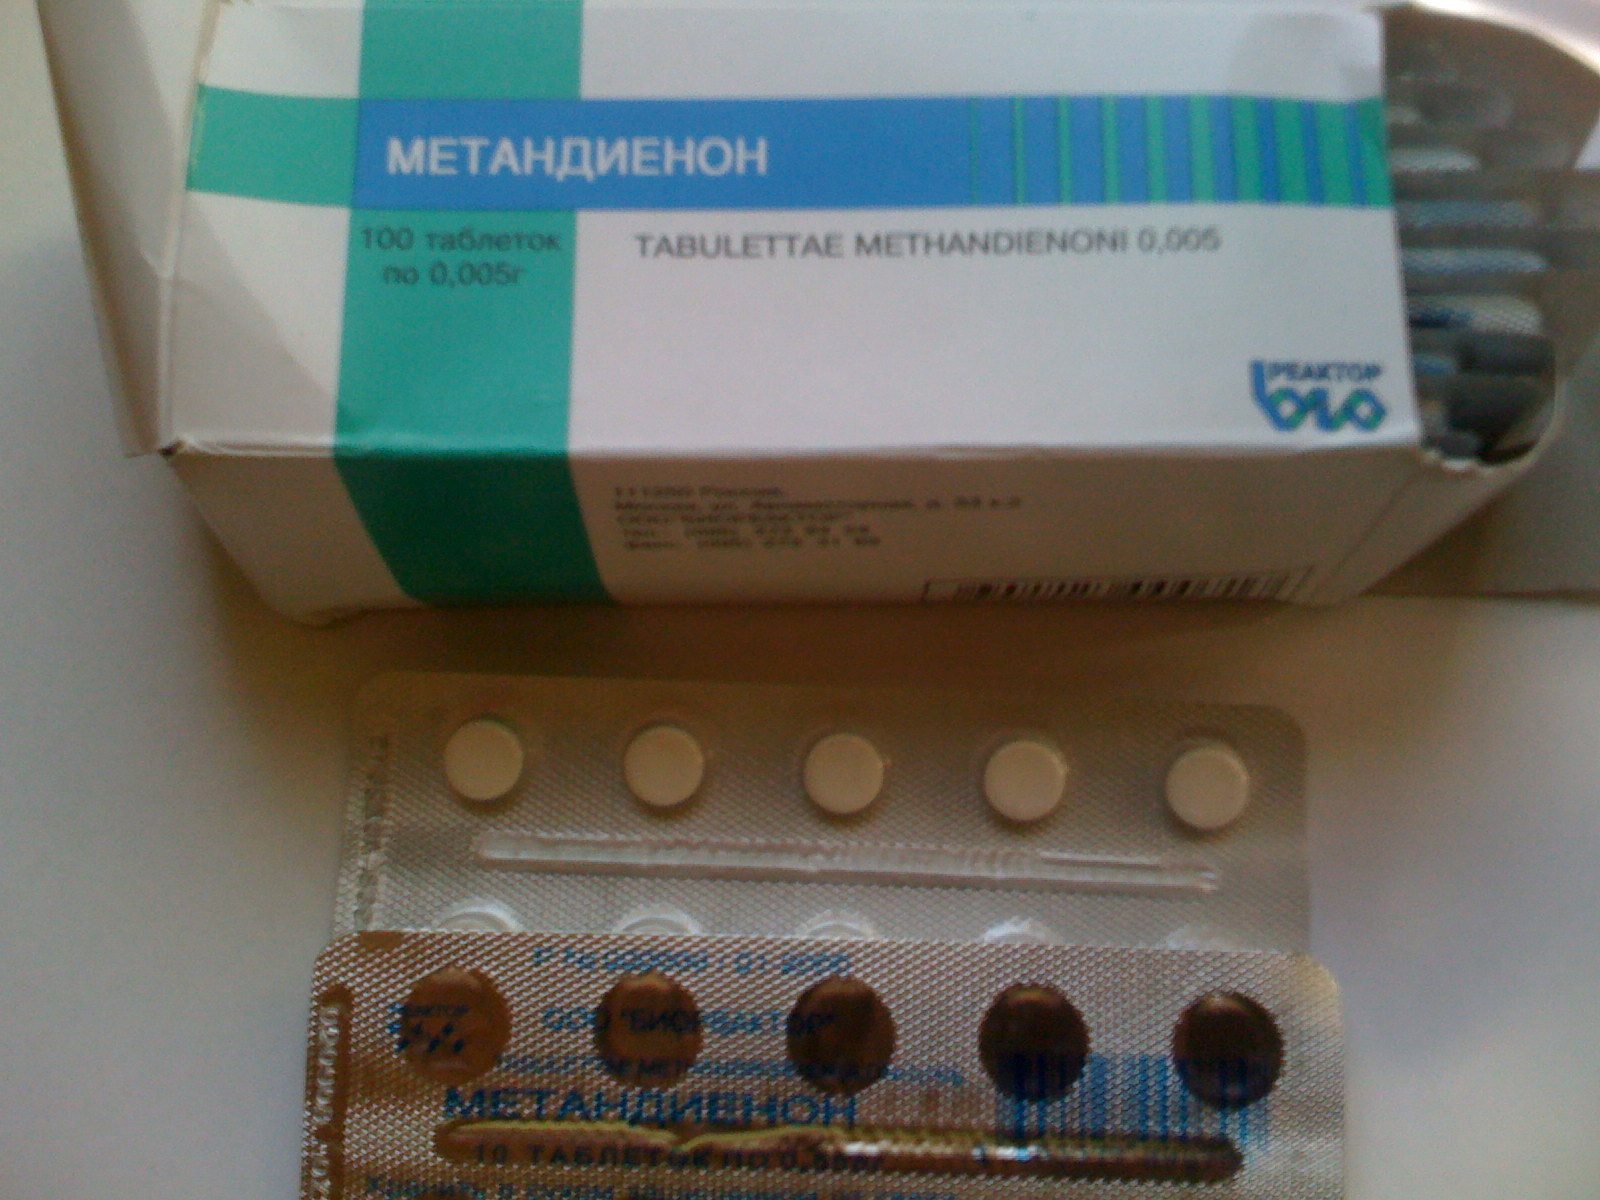 RUSSIAN DBOL BLISTERS 5 mg - 100 tabs METHANDIENONE